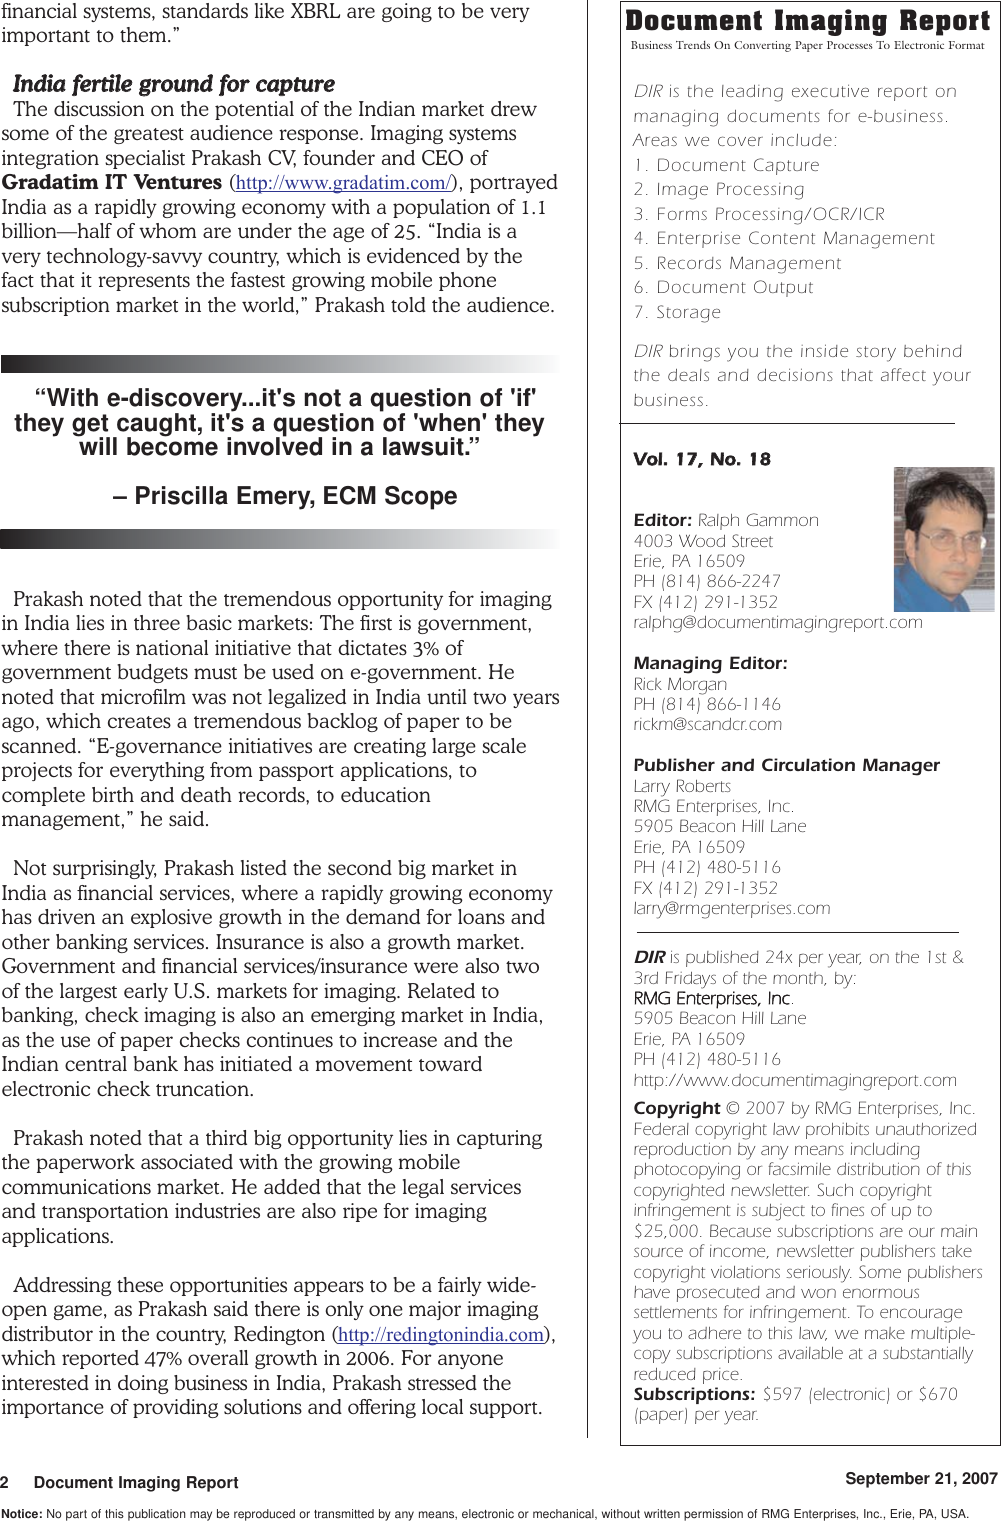 Page 2 of 8 - Fujitsu DIR 9-21-07 FCPA Upgrades Dept. Scanner Dir-092107 Review